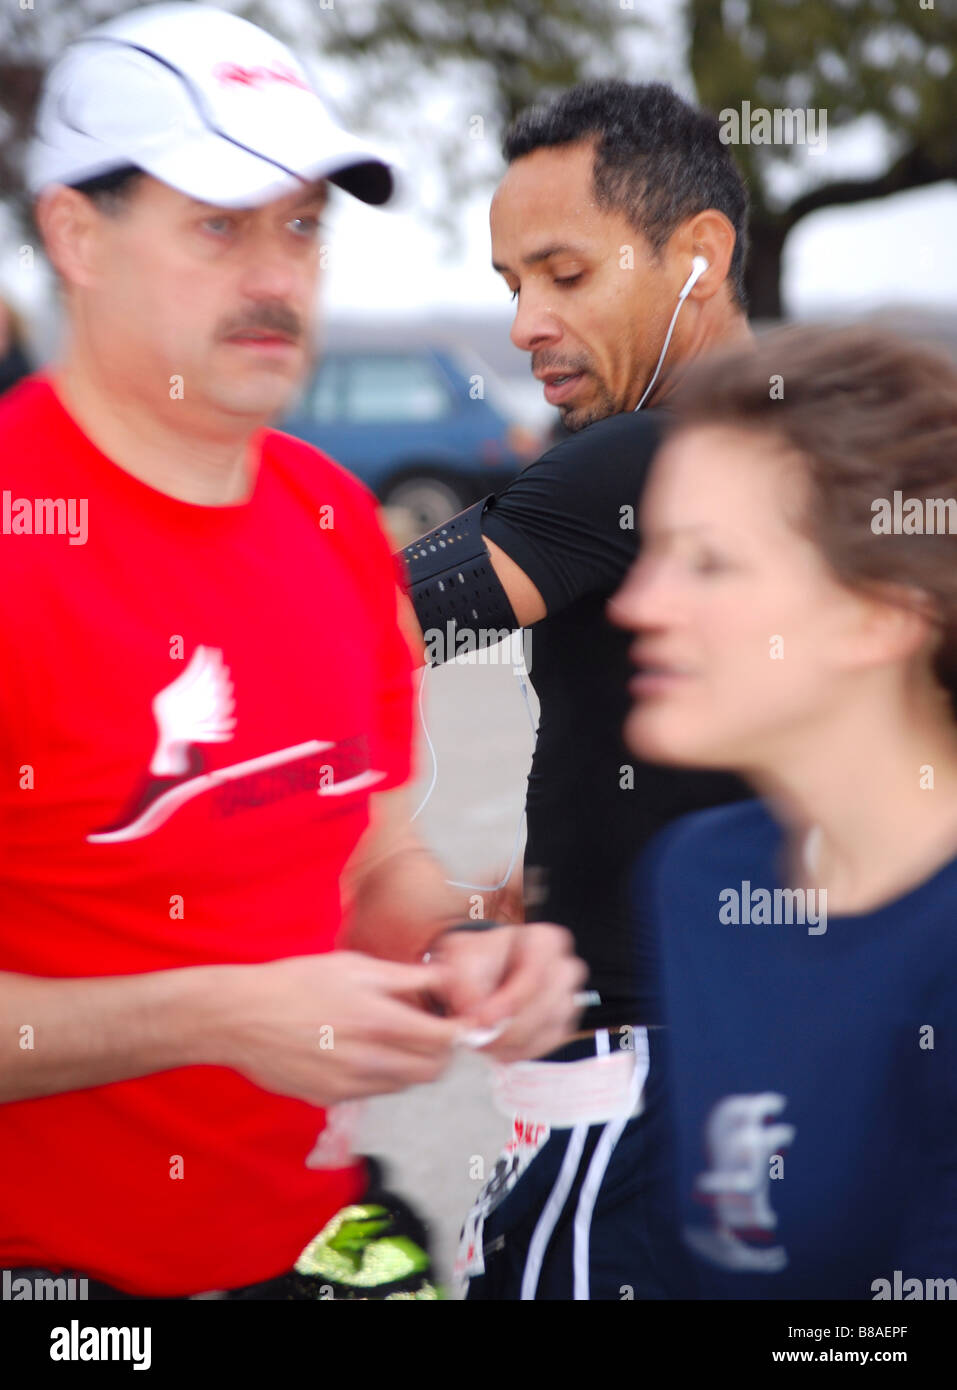 blurred people after a half marathon Stock Photo